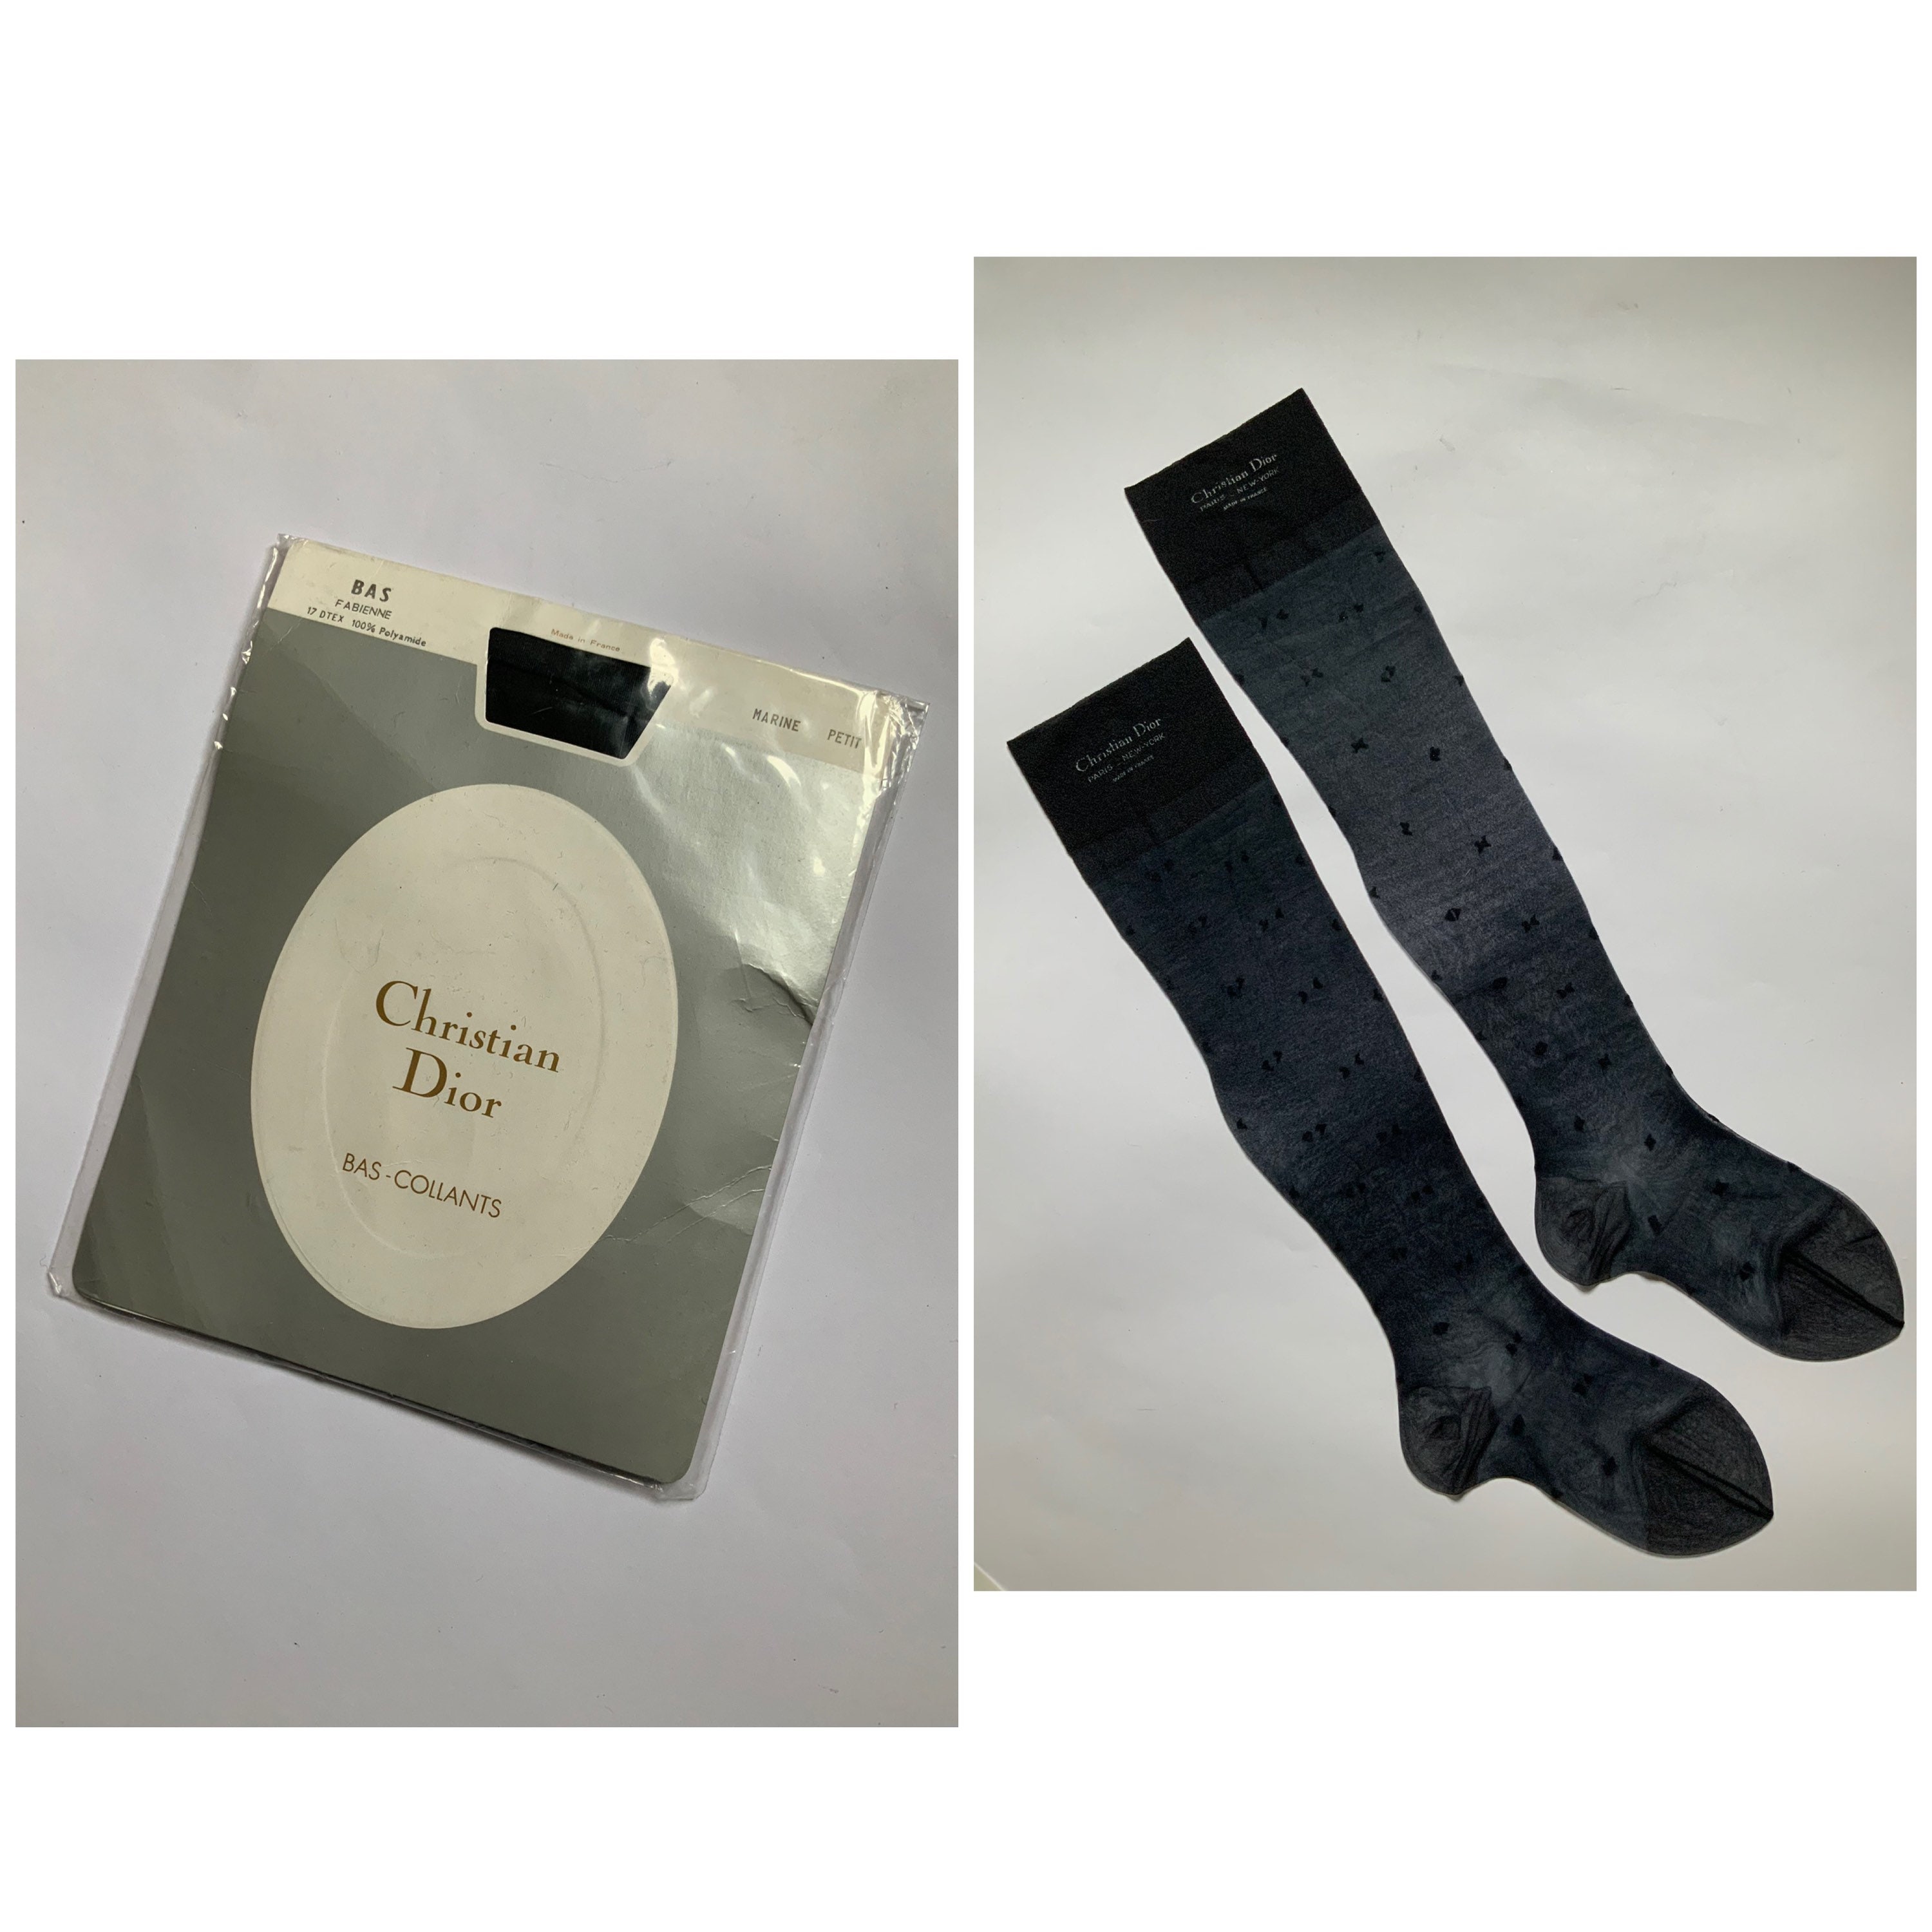 Christian dior stockings